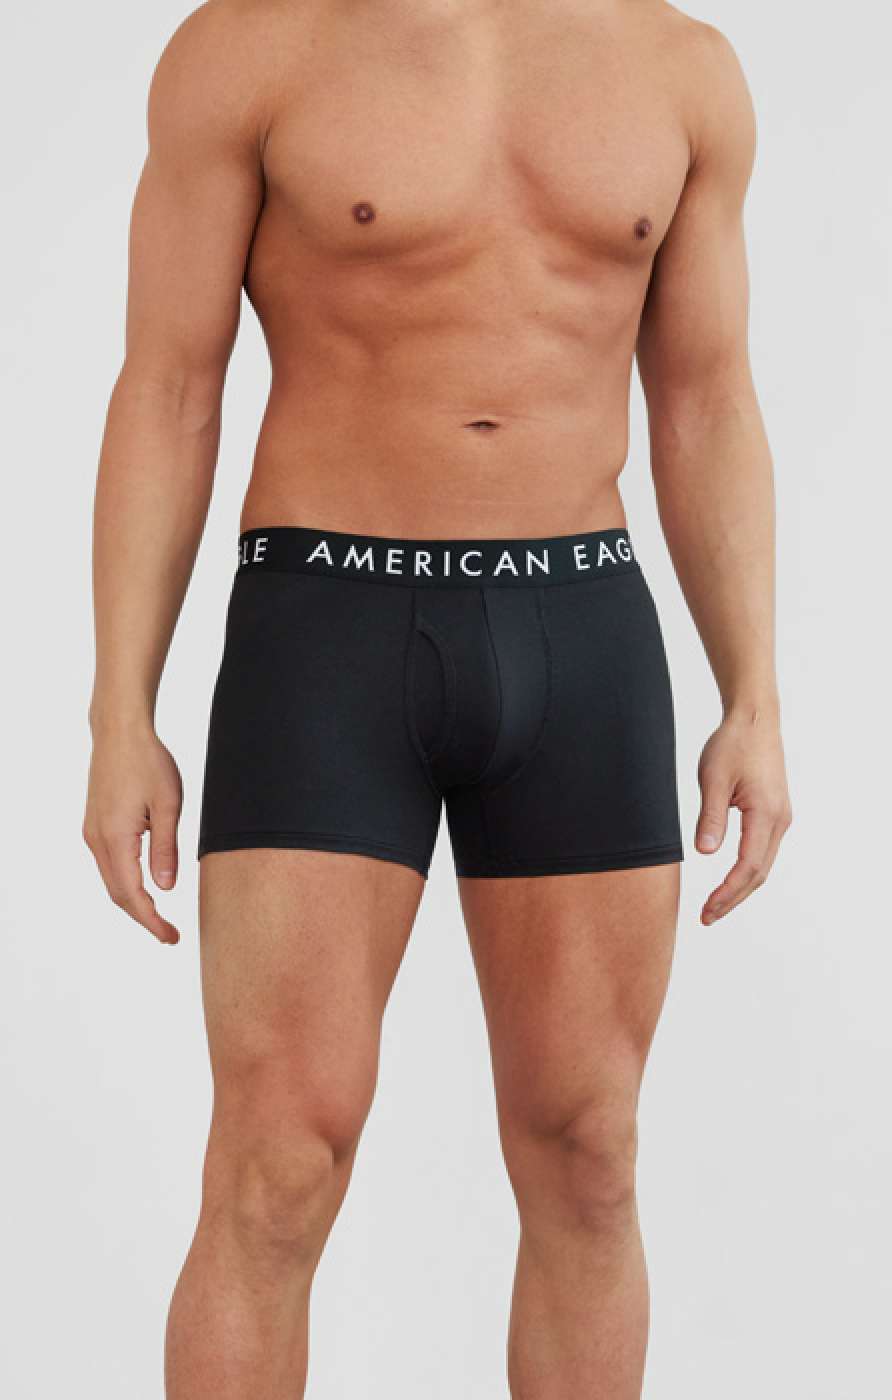 Lucky Brand Men's Underwear - Cotton Blend Stretch Boxer Briefs (6 Pack),  Size Medium, Black/Light Grey/Black Print